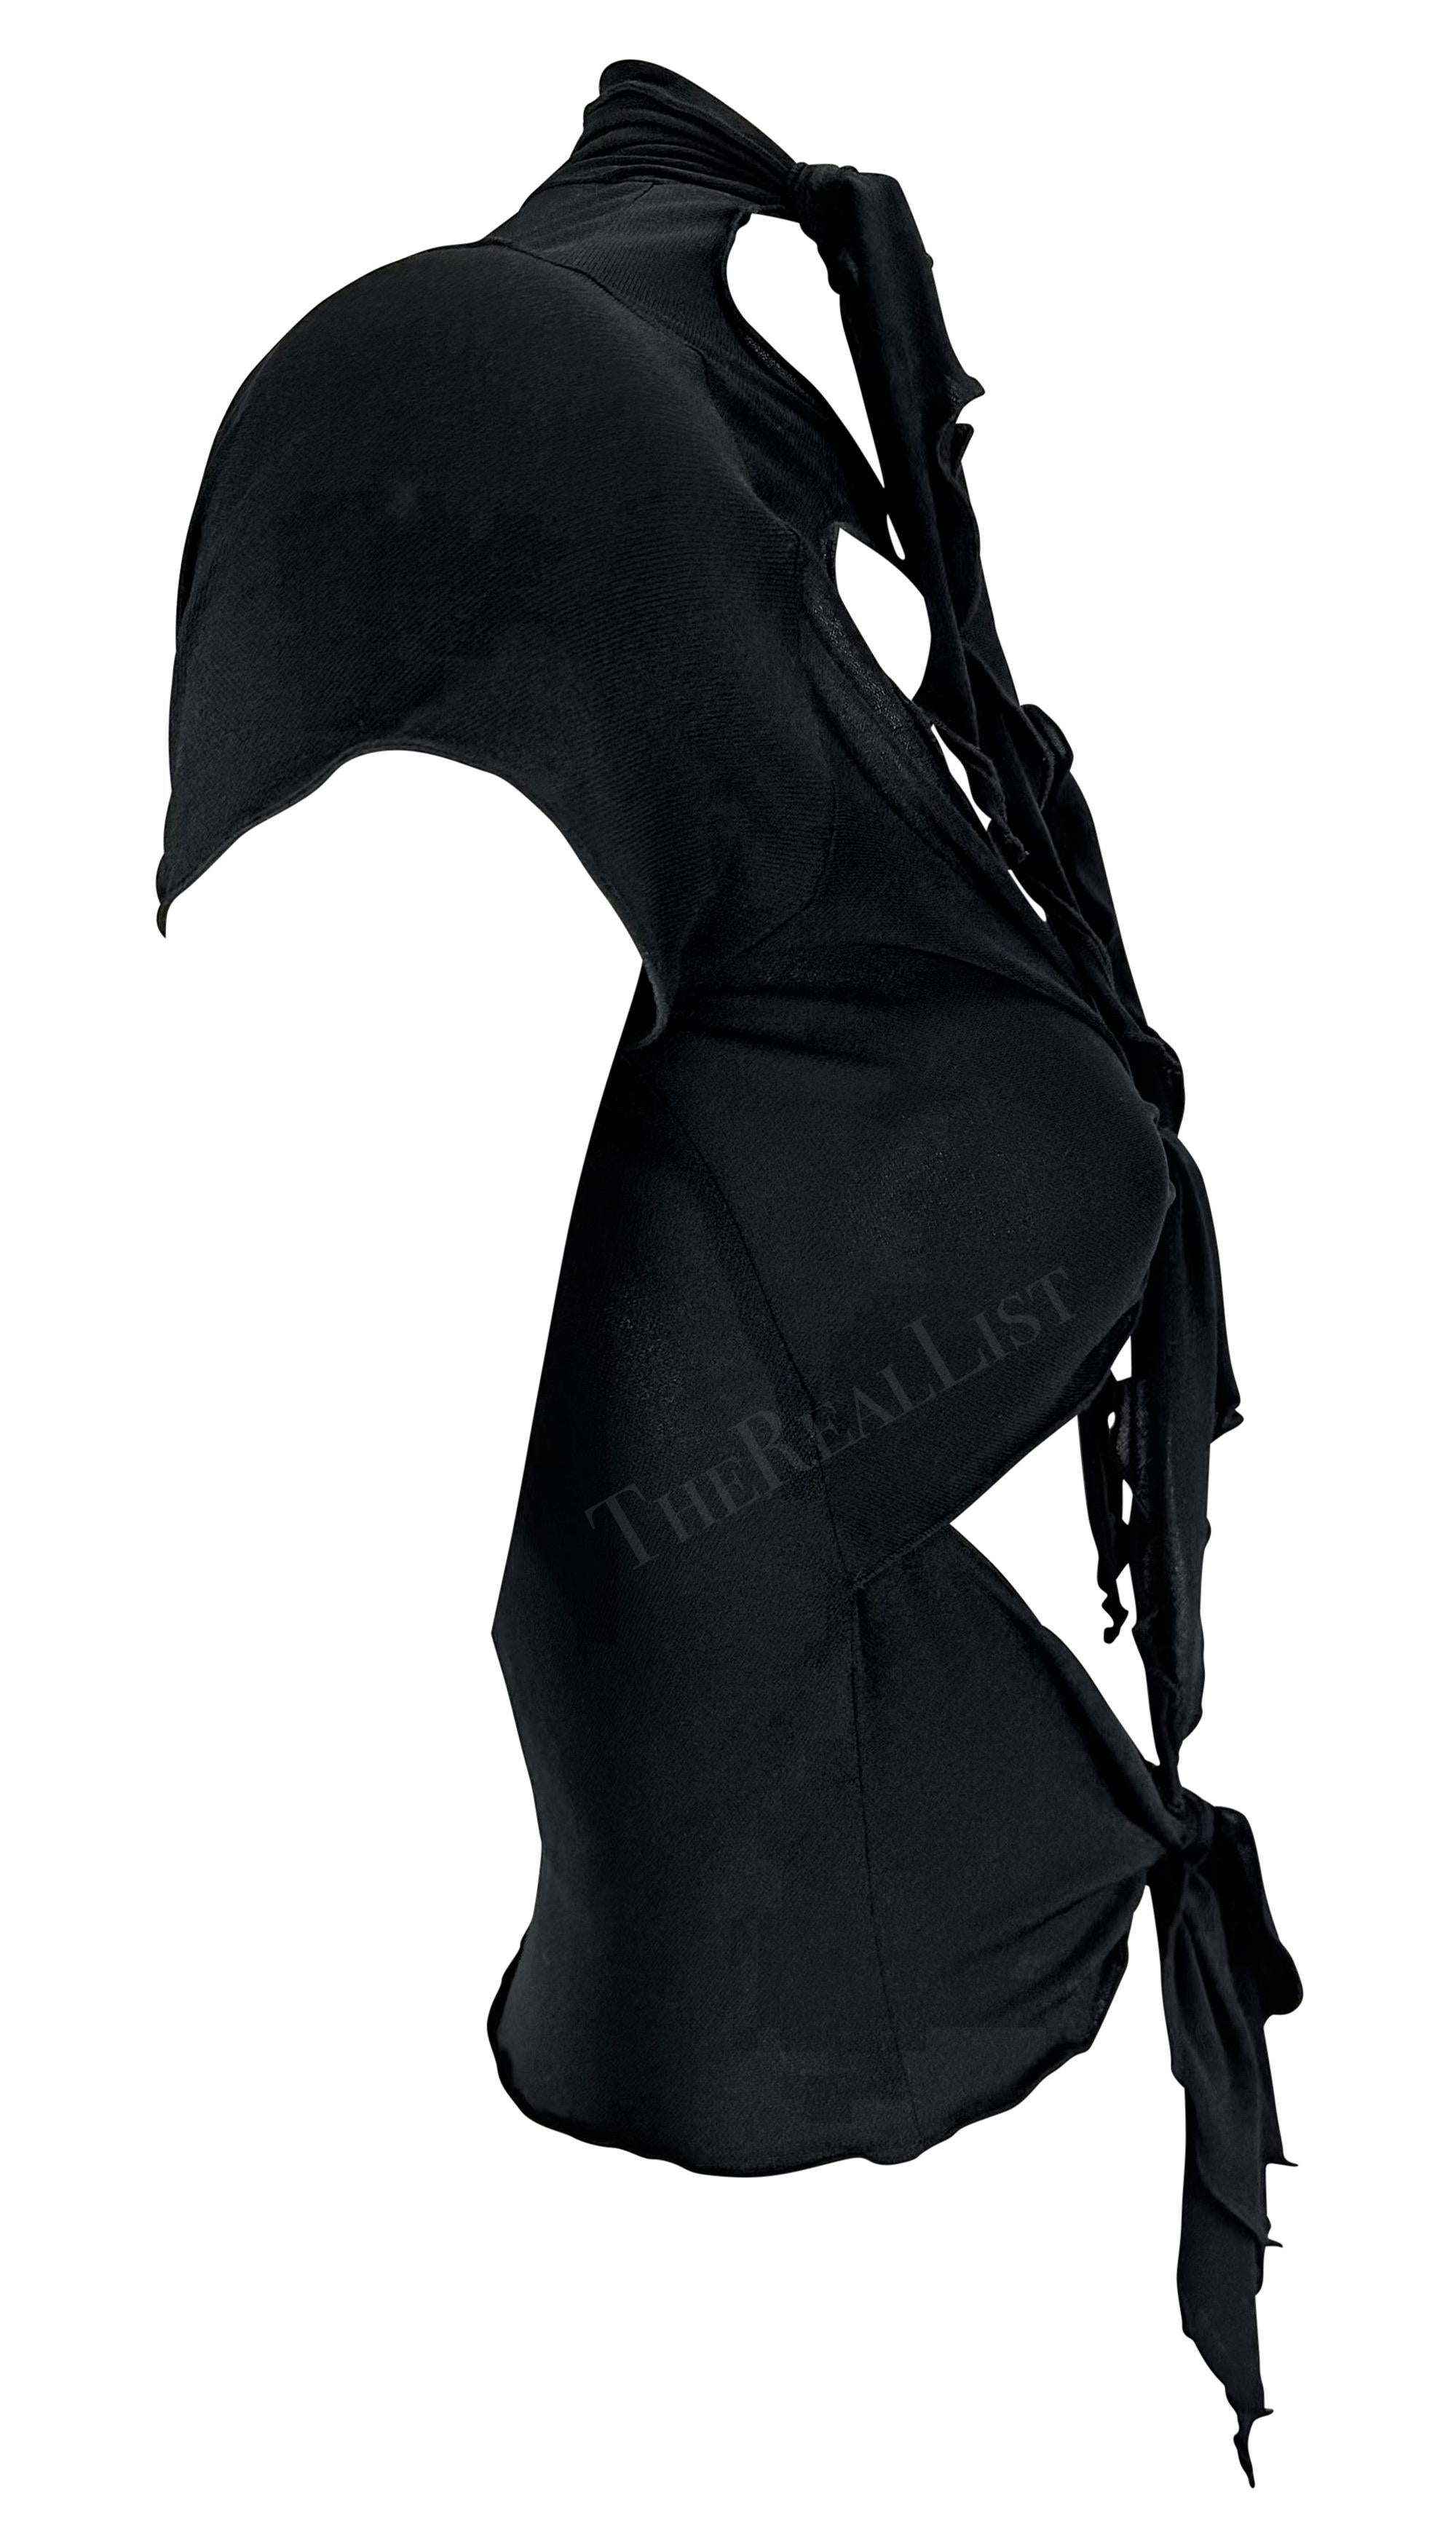 S/S 2001 Anna Sui Tie Front Stretch Bodycon Cutout Black T-Shirt 3